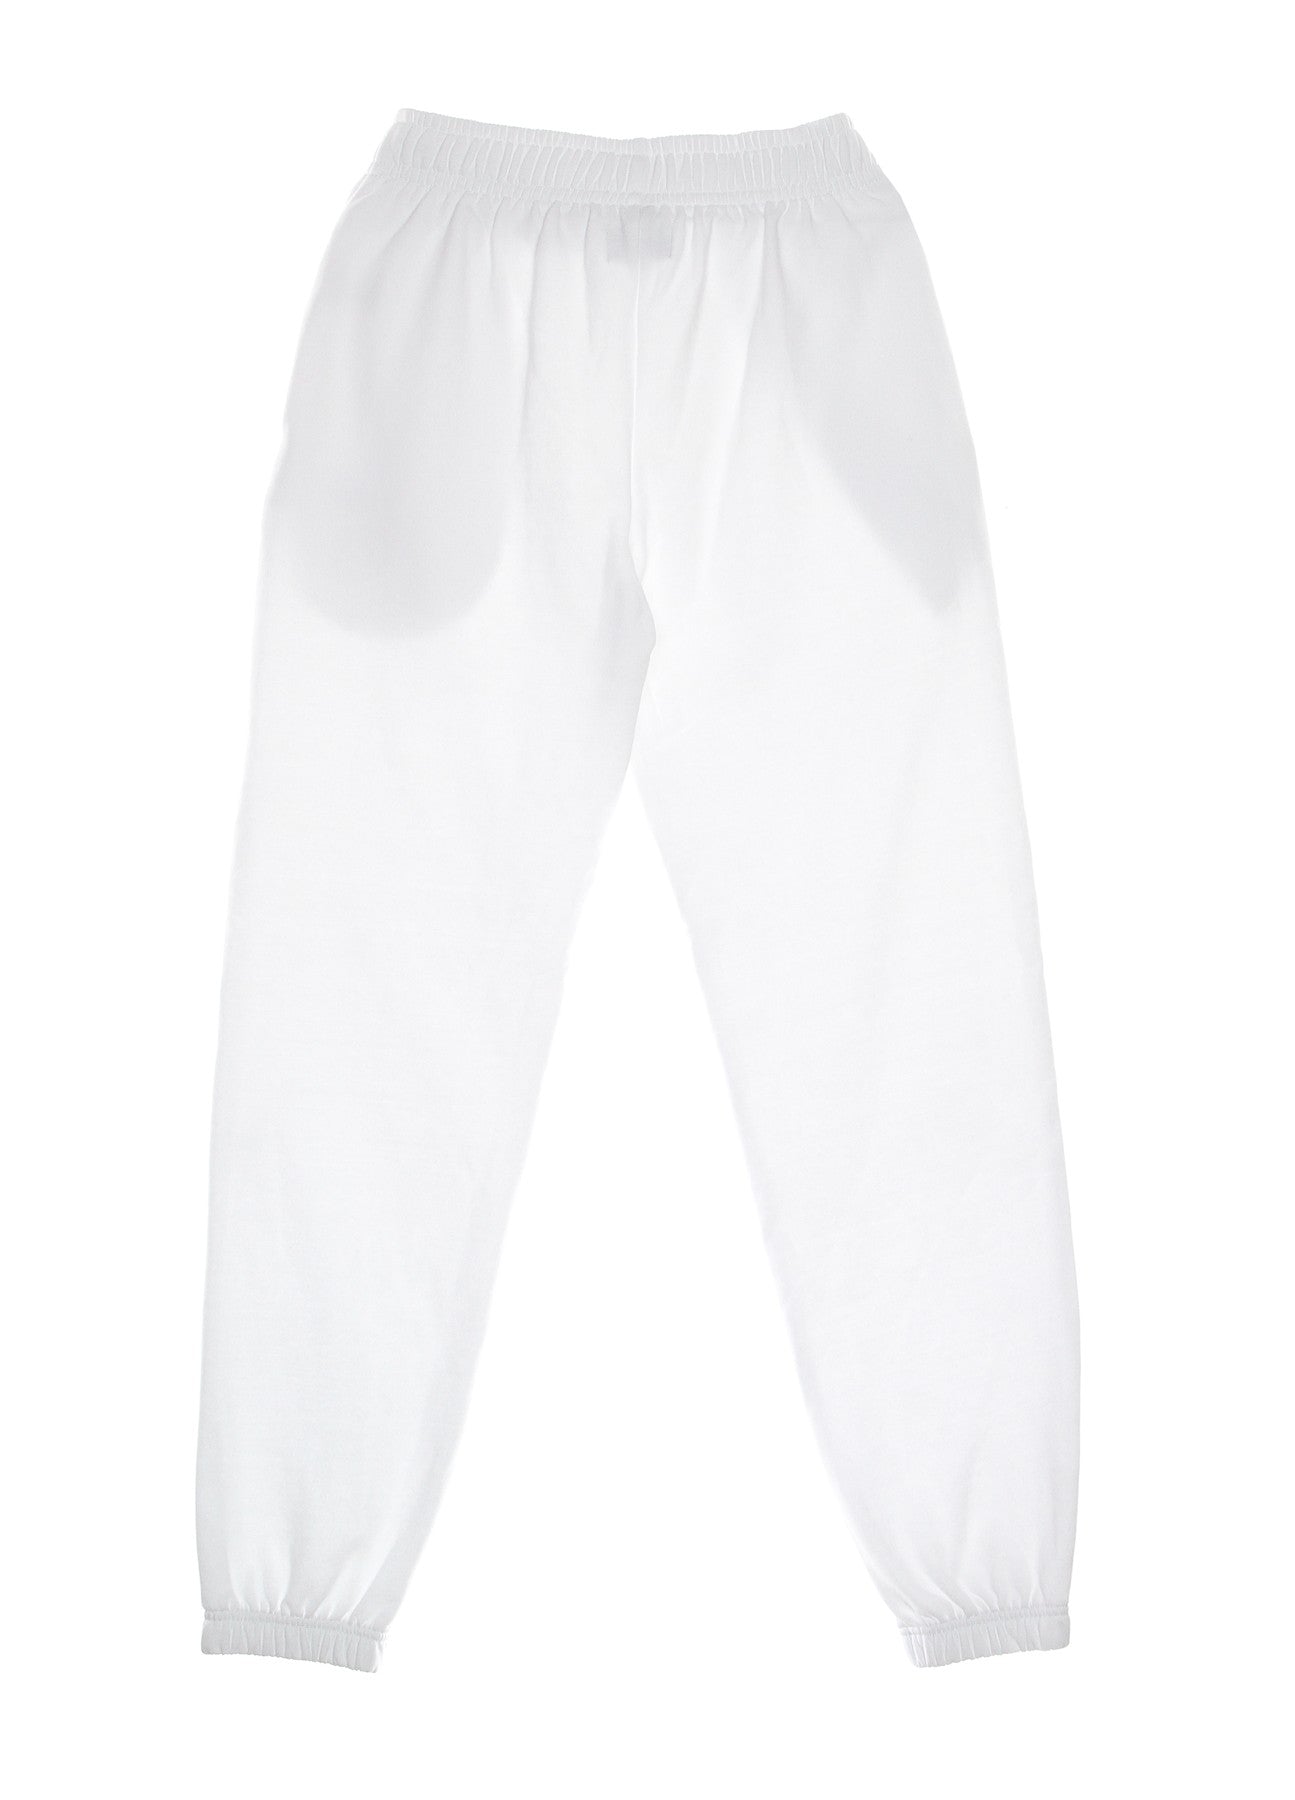 Pantalone Tuta Felpato Uomo Starter Pack Sweatpant White ATIPICI002SP-SWEATPANT